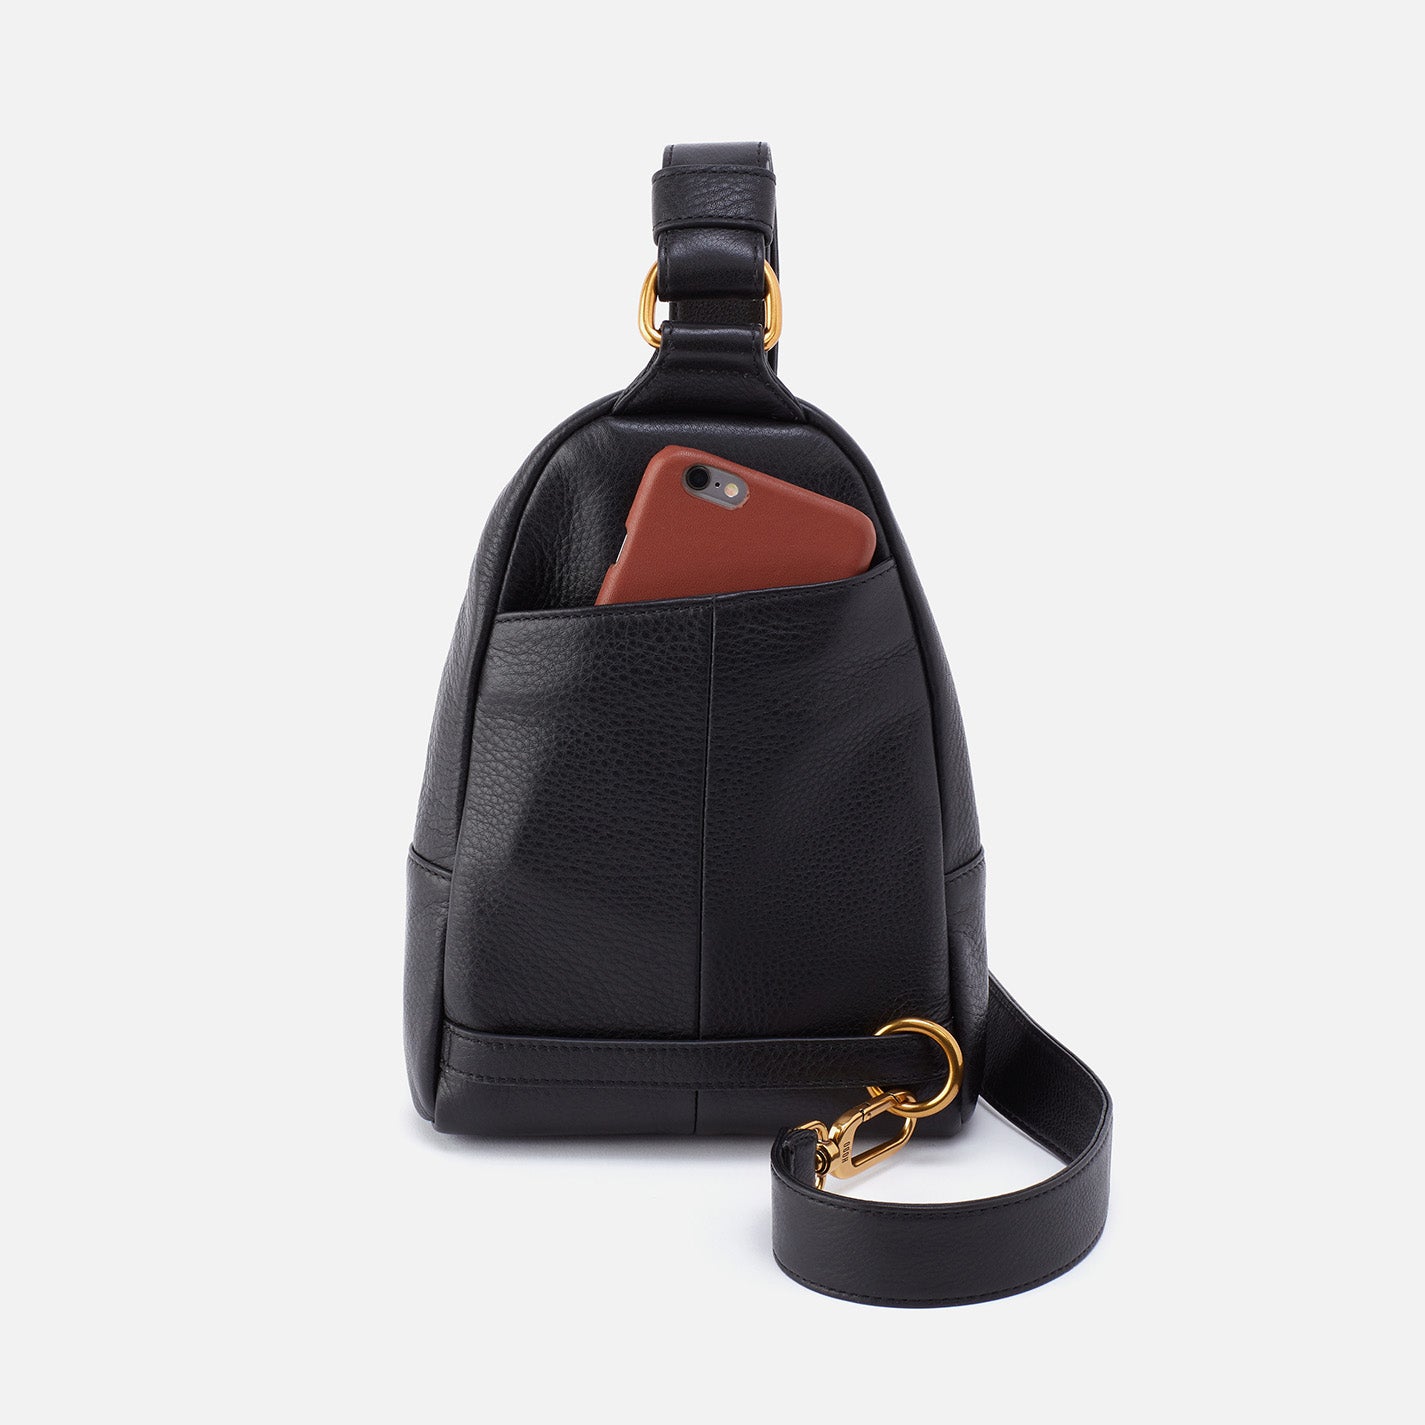 Black Pebble Adjustable Leather Strap, 1inch Wide, Choose Length